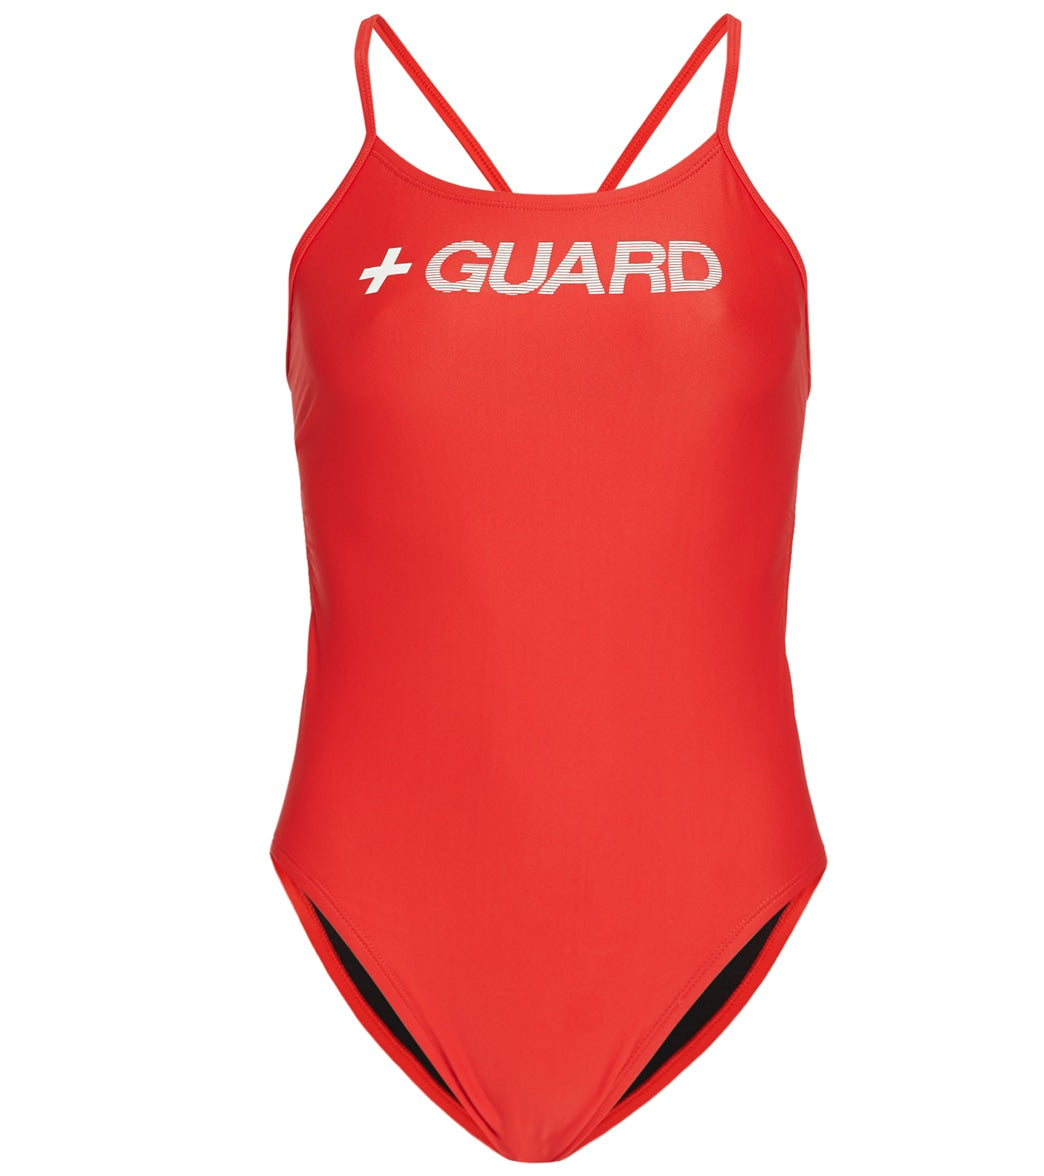 Women's Lifeguard Cut Out One Piece Swimsuit at SwimOutlet.com